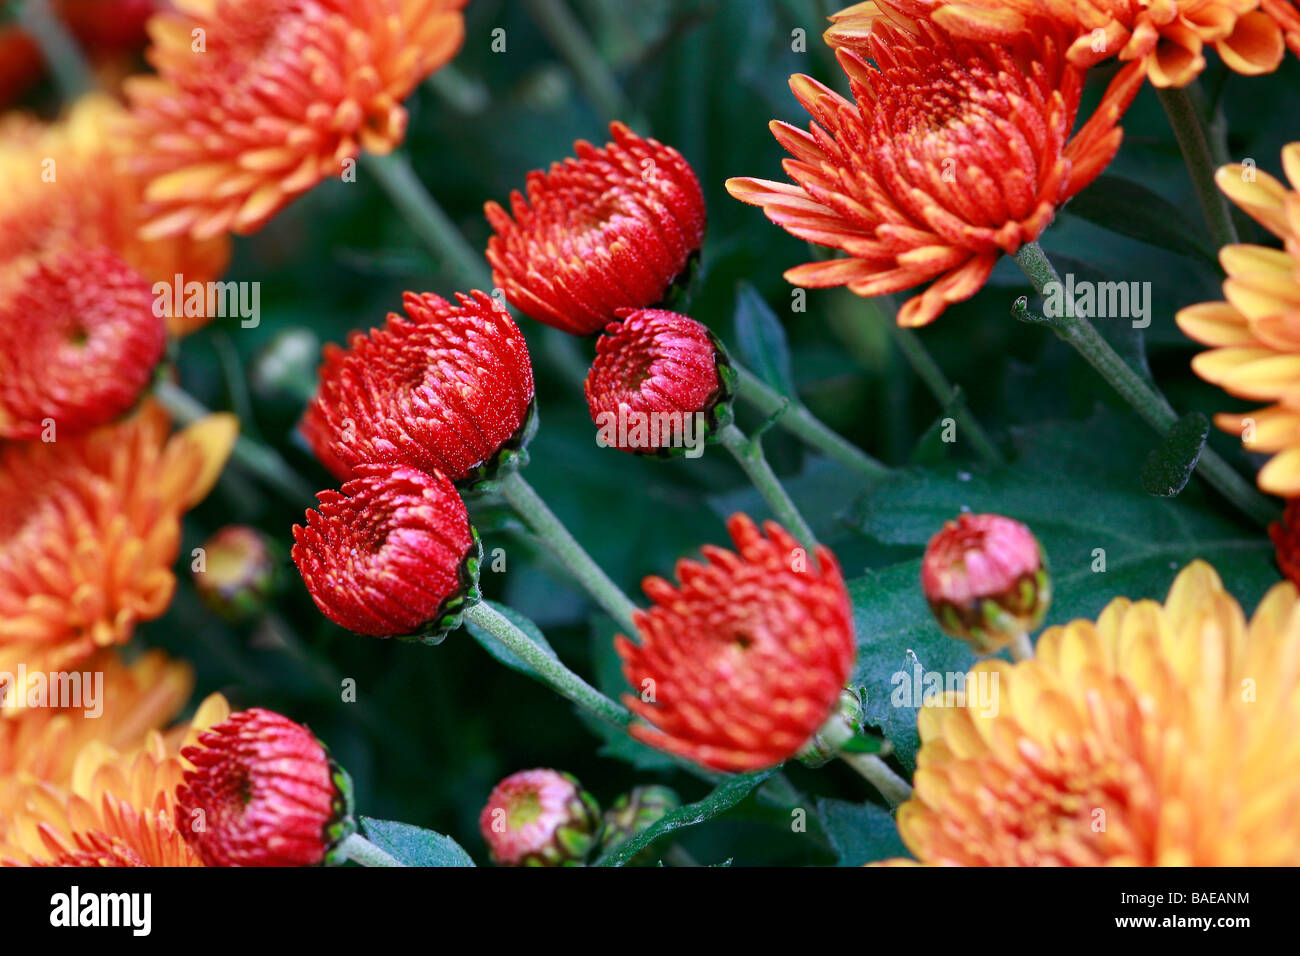 Korean chrysanthemum Stock Photo